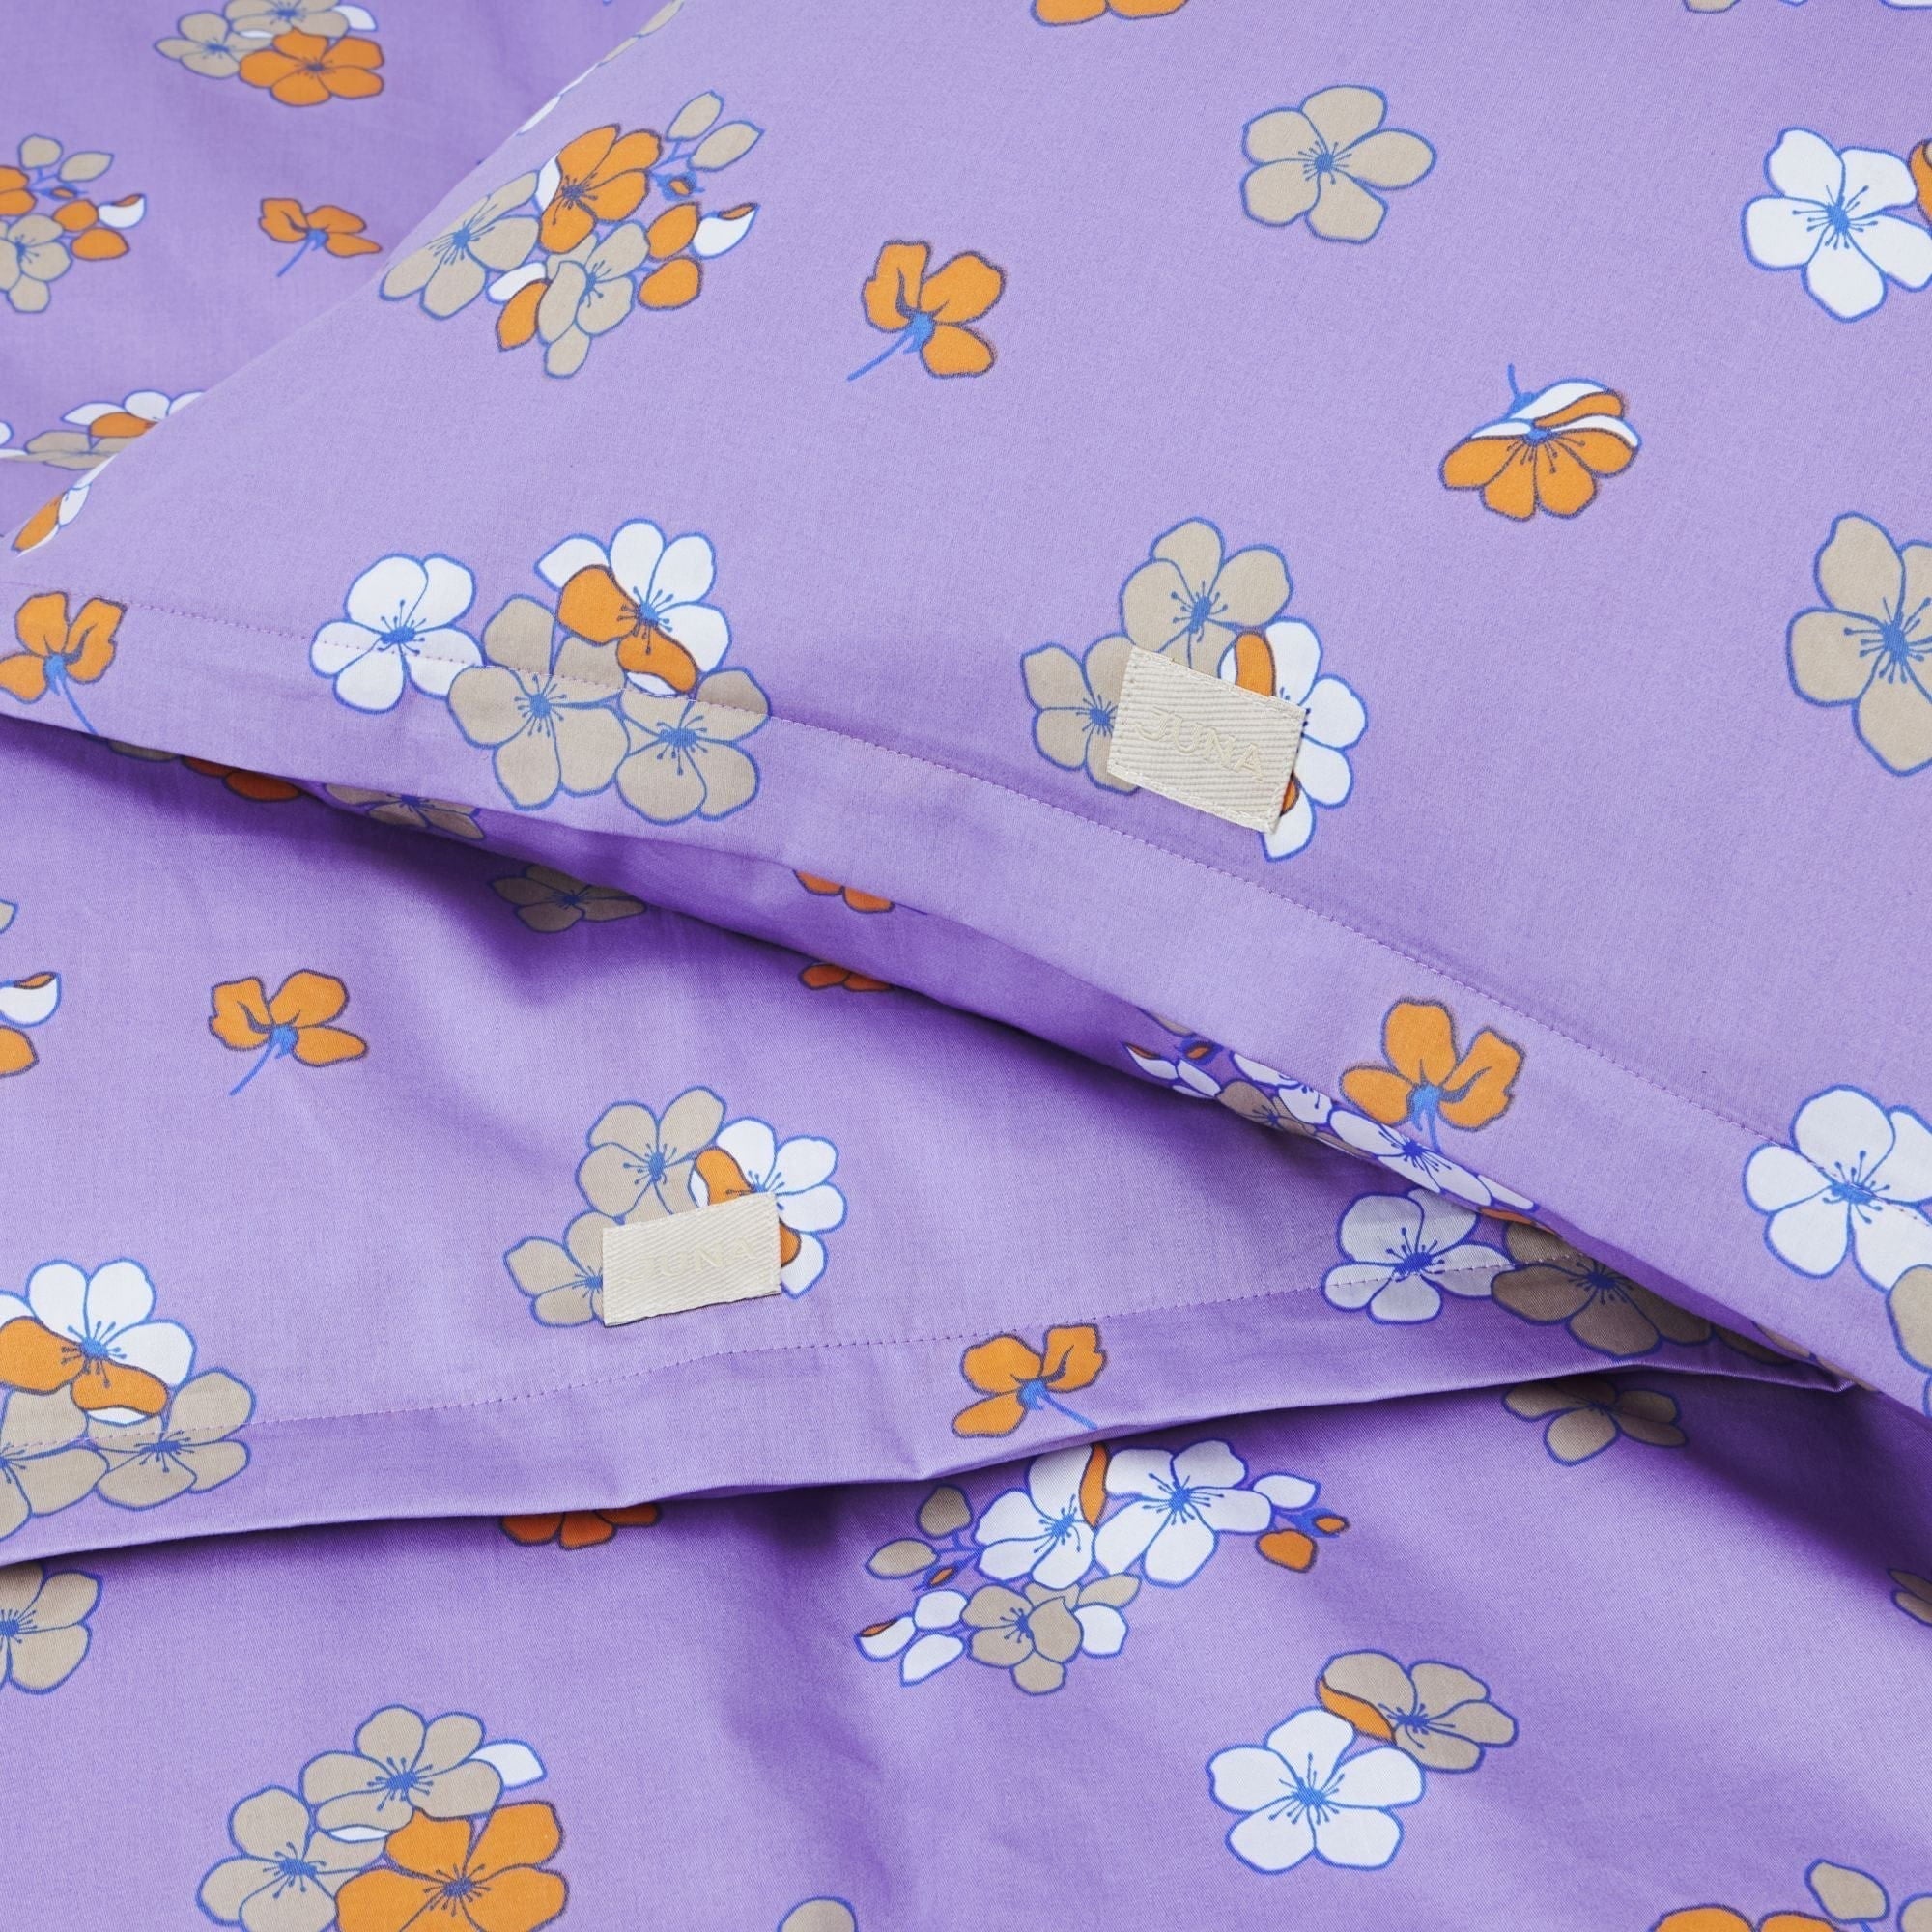 JUNA Stora behagligt sängkläder 140x220 cm, lavendel